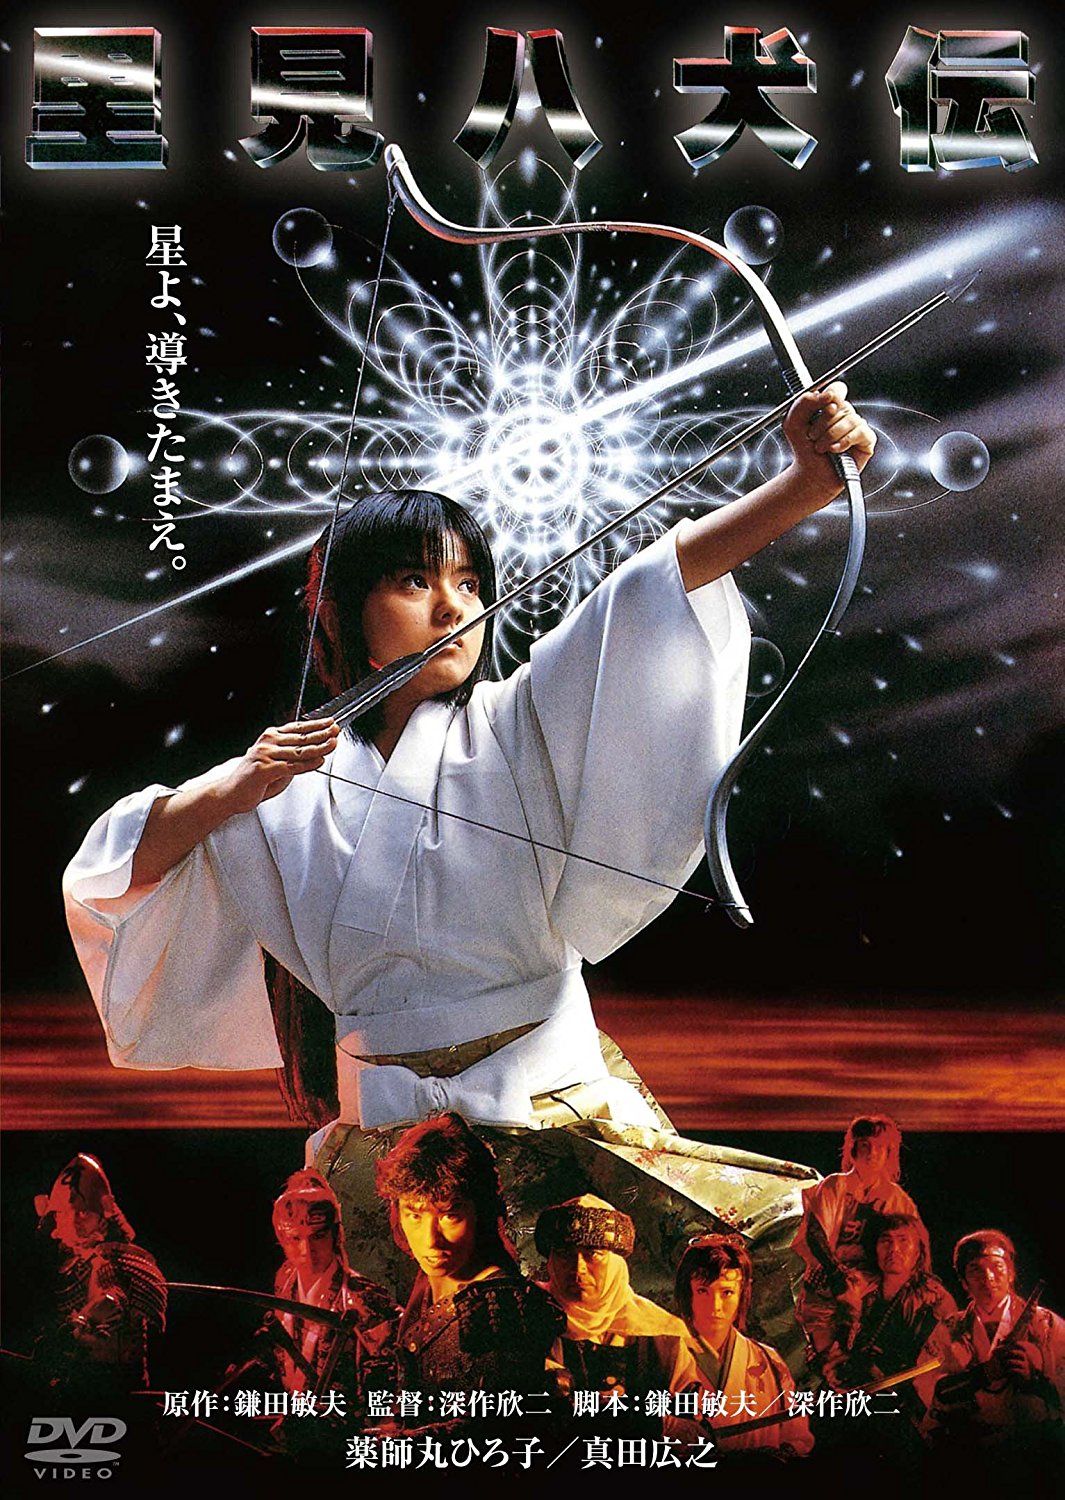 [里见八犬传].Legend.of.Eight.Samurai.1983.BluRay.1080p.AVC.LPCM.2.0-iFPD    43.35G& ^4 ]" F8 I/ p! S$ V0 i-1.jpg